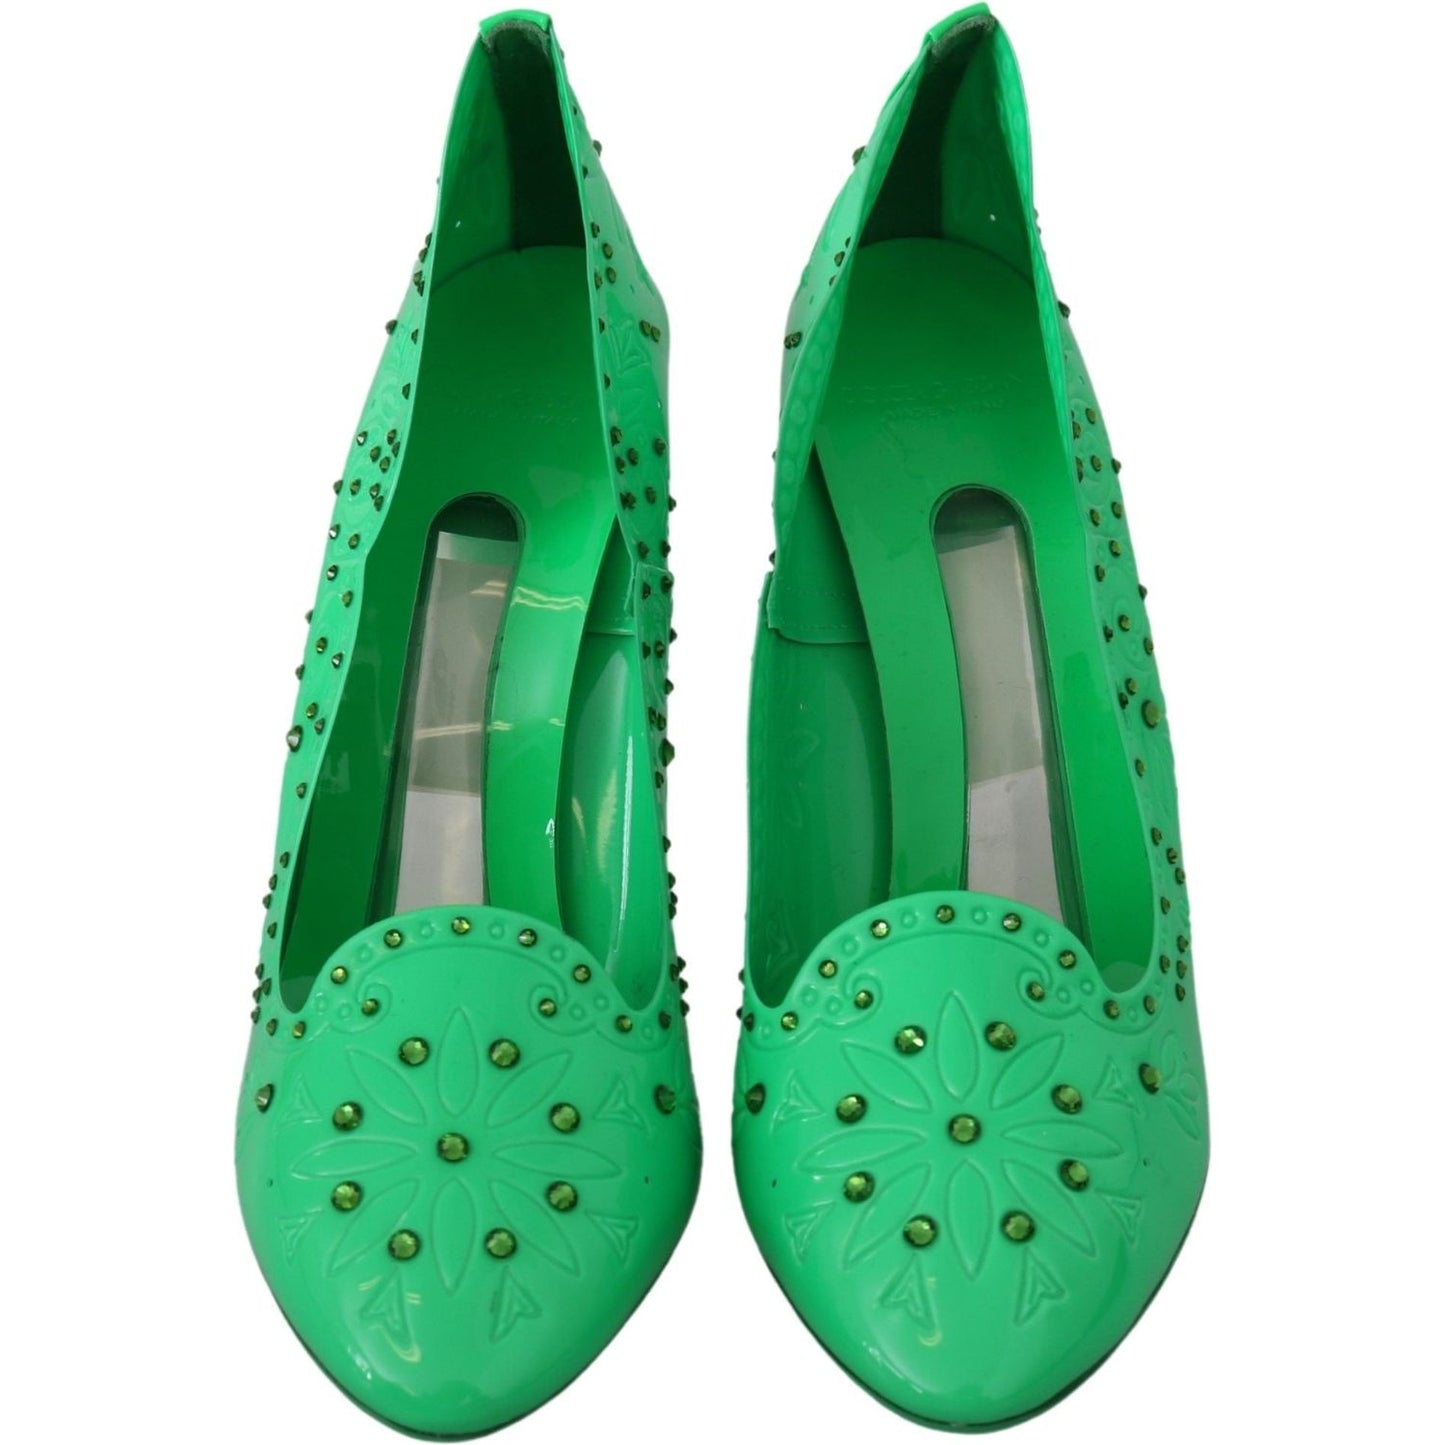 Dolce & Gabbana Enchanting Crystal Cinderella Pumps green-crystal-floral-heels-cinderella-shoes IMG_1891-d592e517-30a.jpg